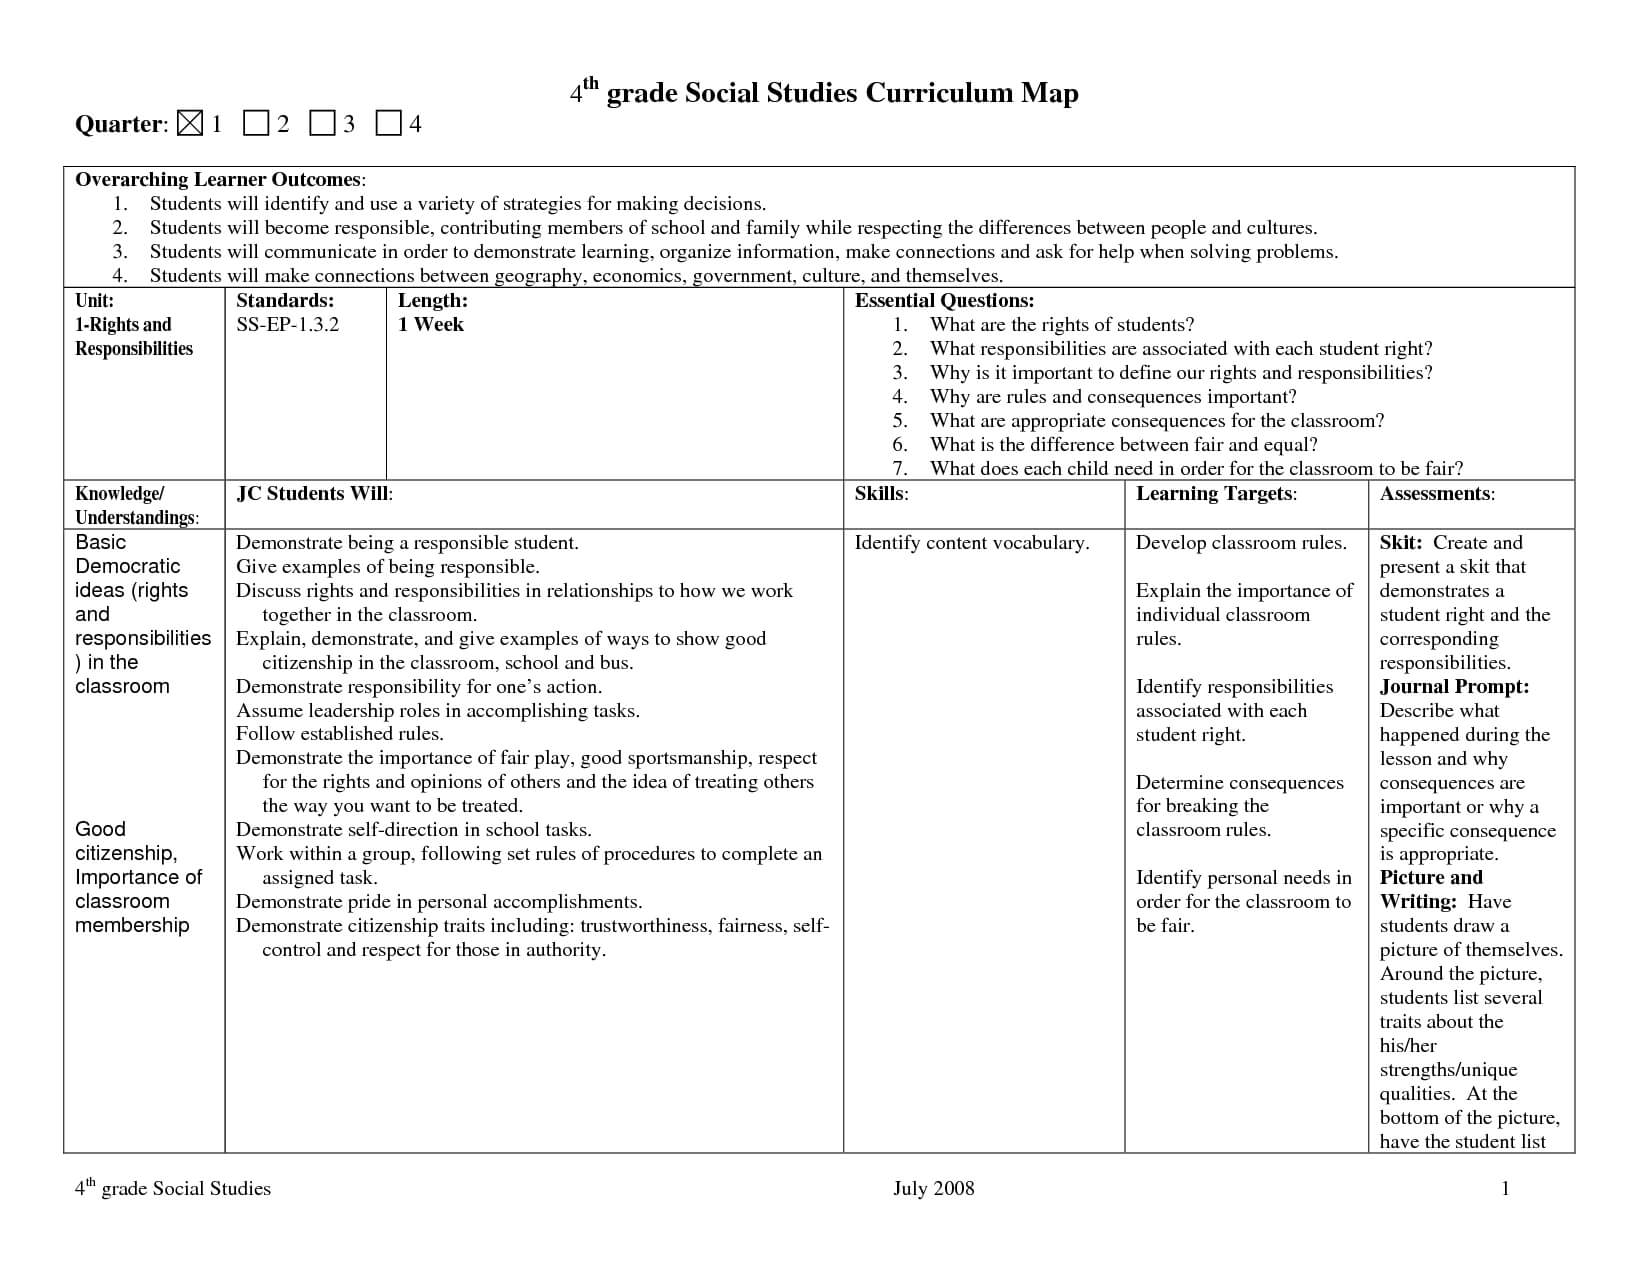 Pinlesa Deel On Classroom | Curriculum Mapping With Regard To Blank Curriculum Map Template